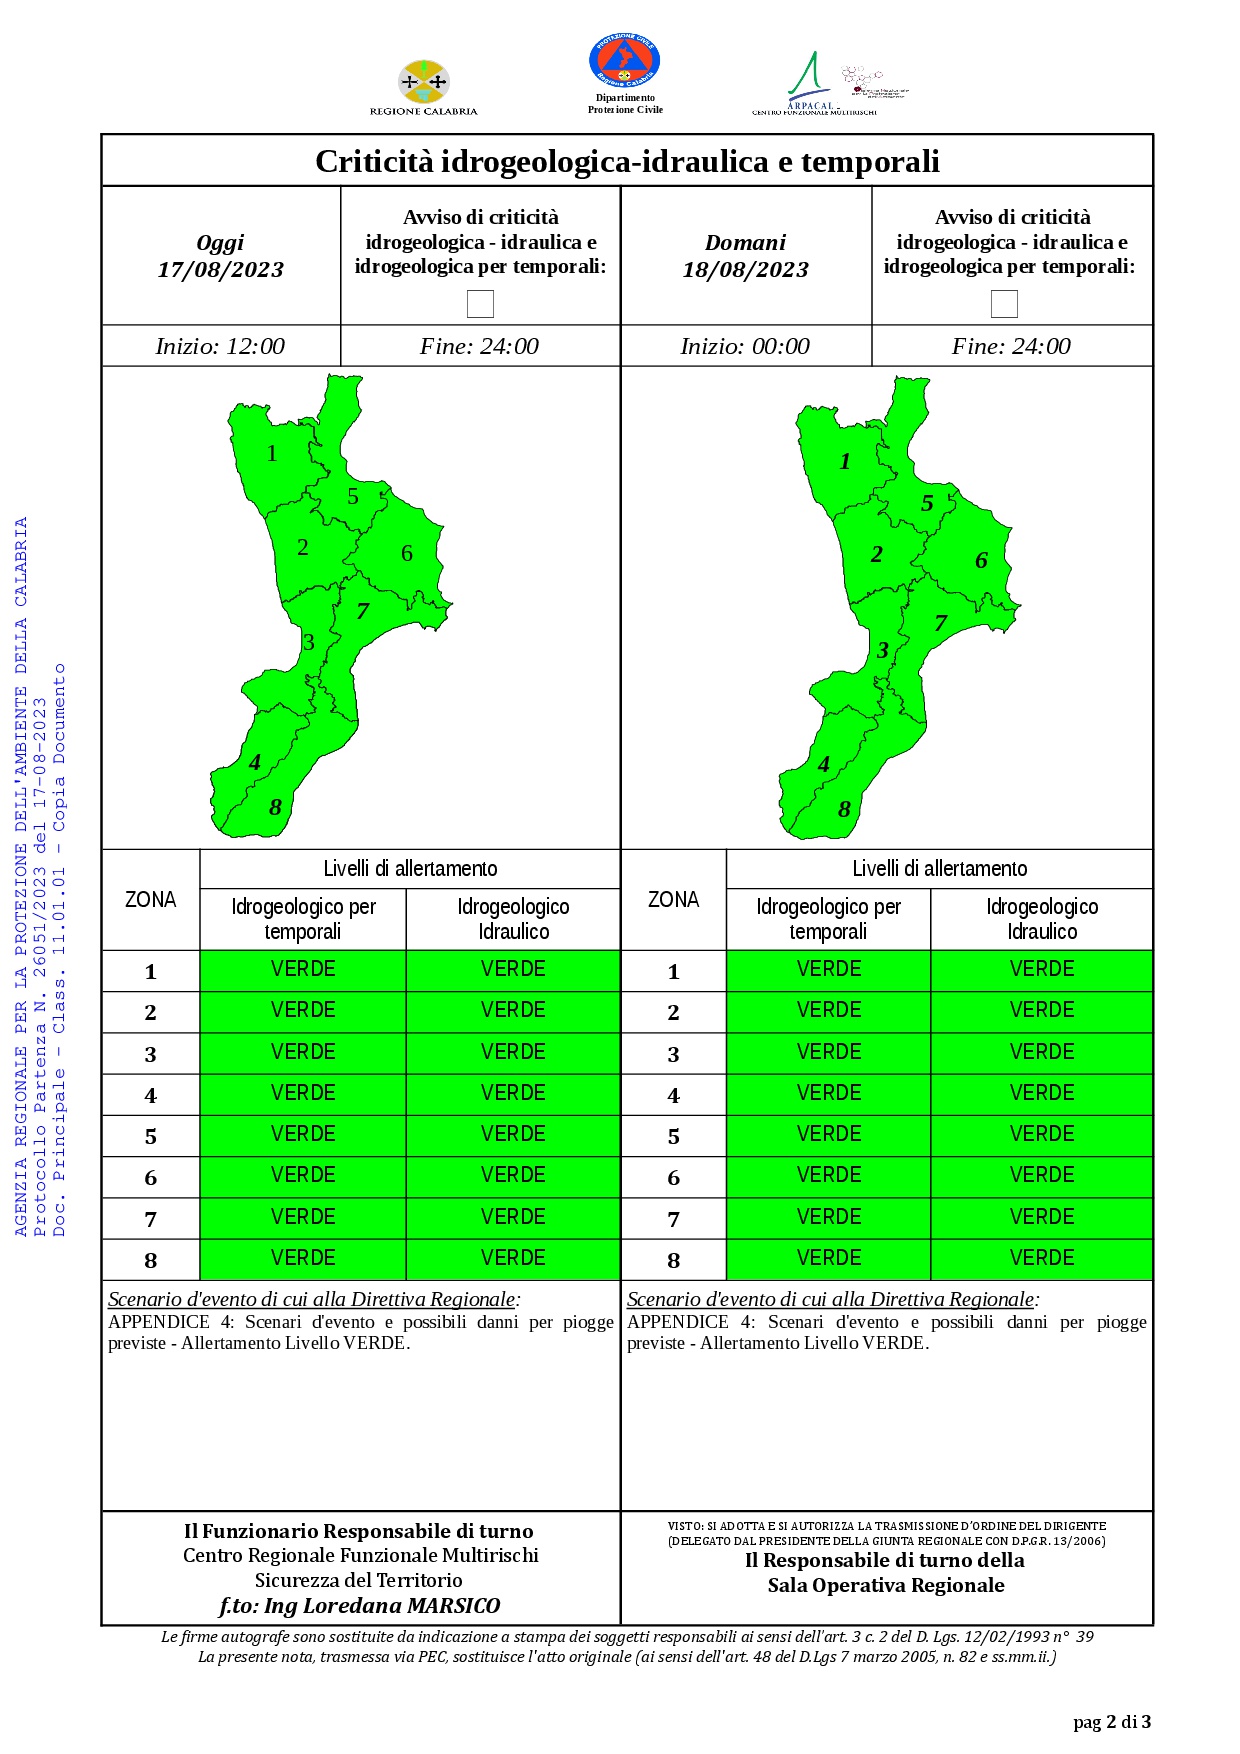 Criticità idrogeologica-idraulica e temporali in Calabria 17-08-2023